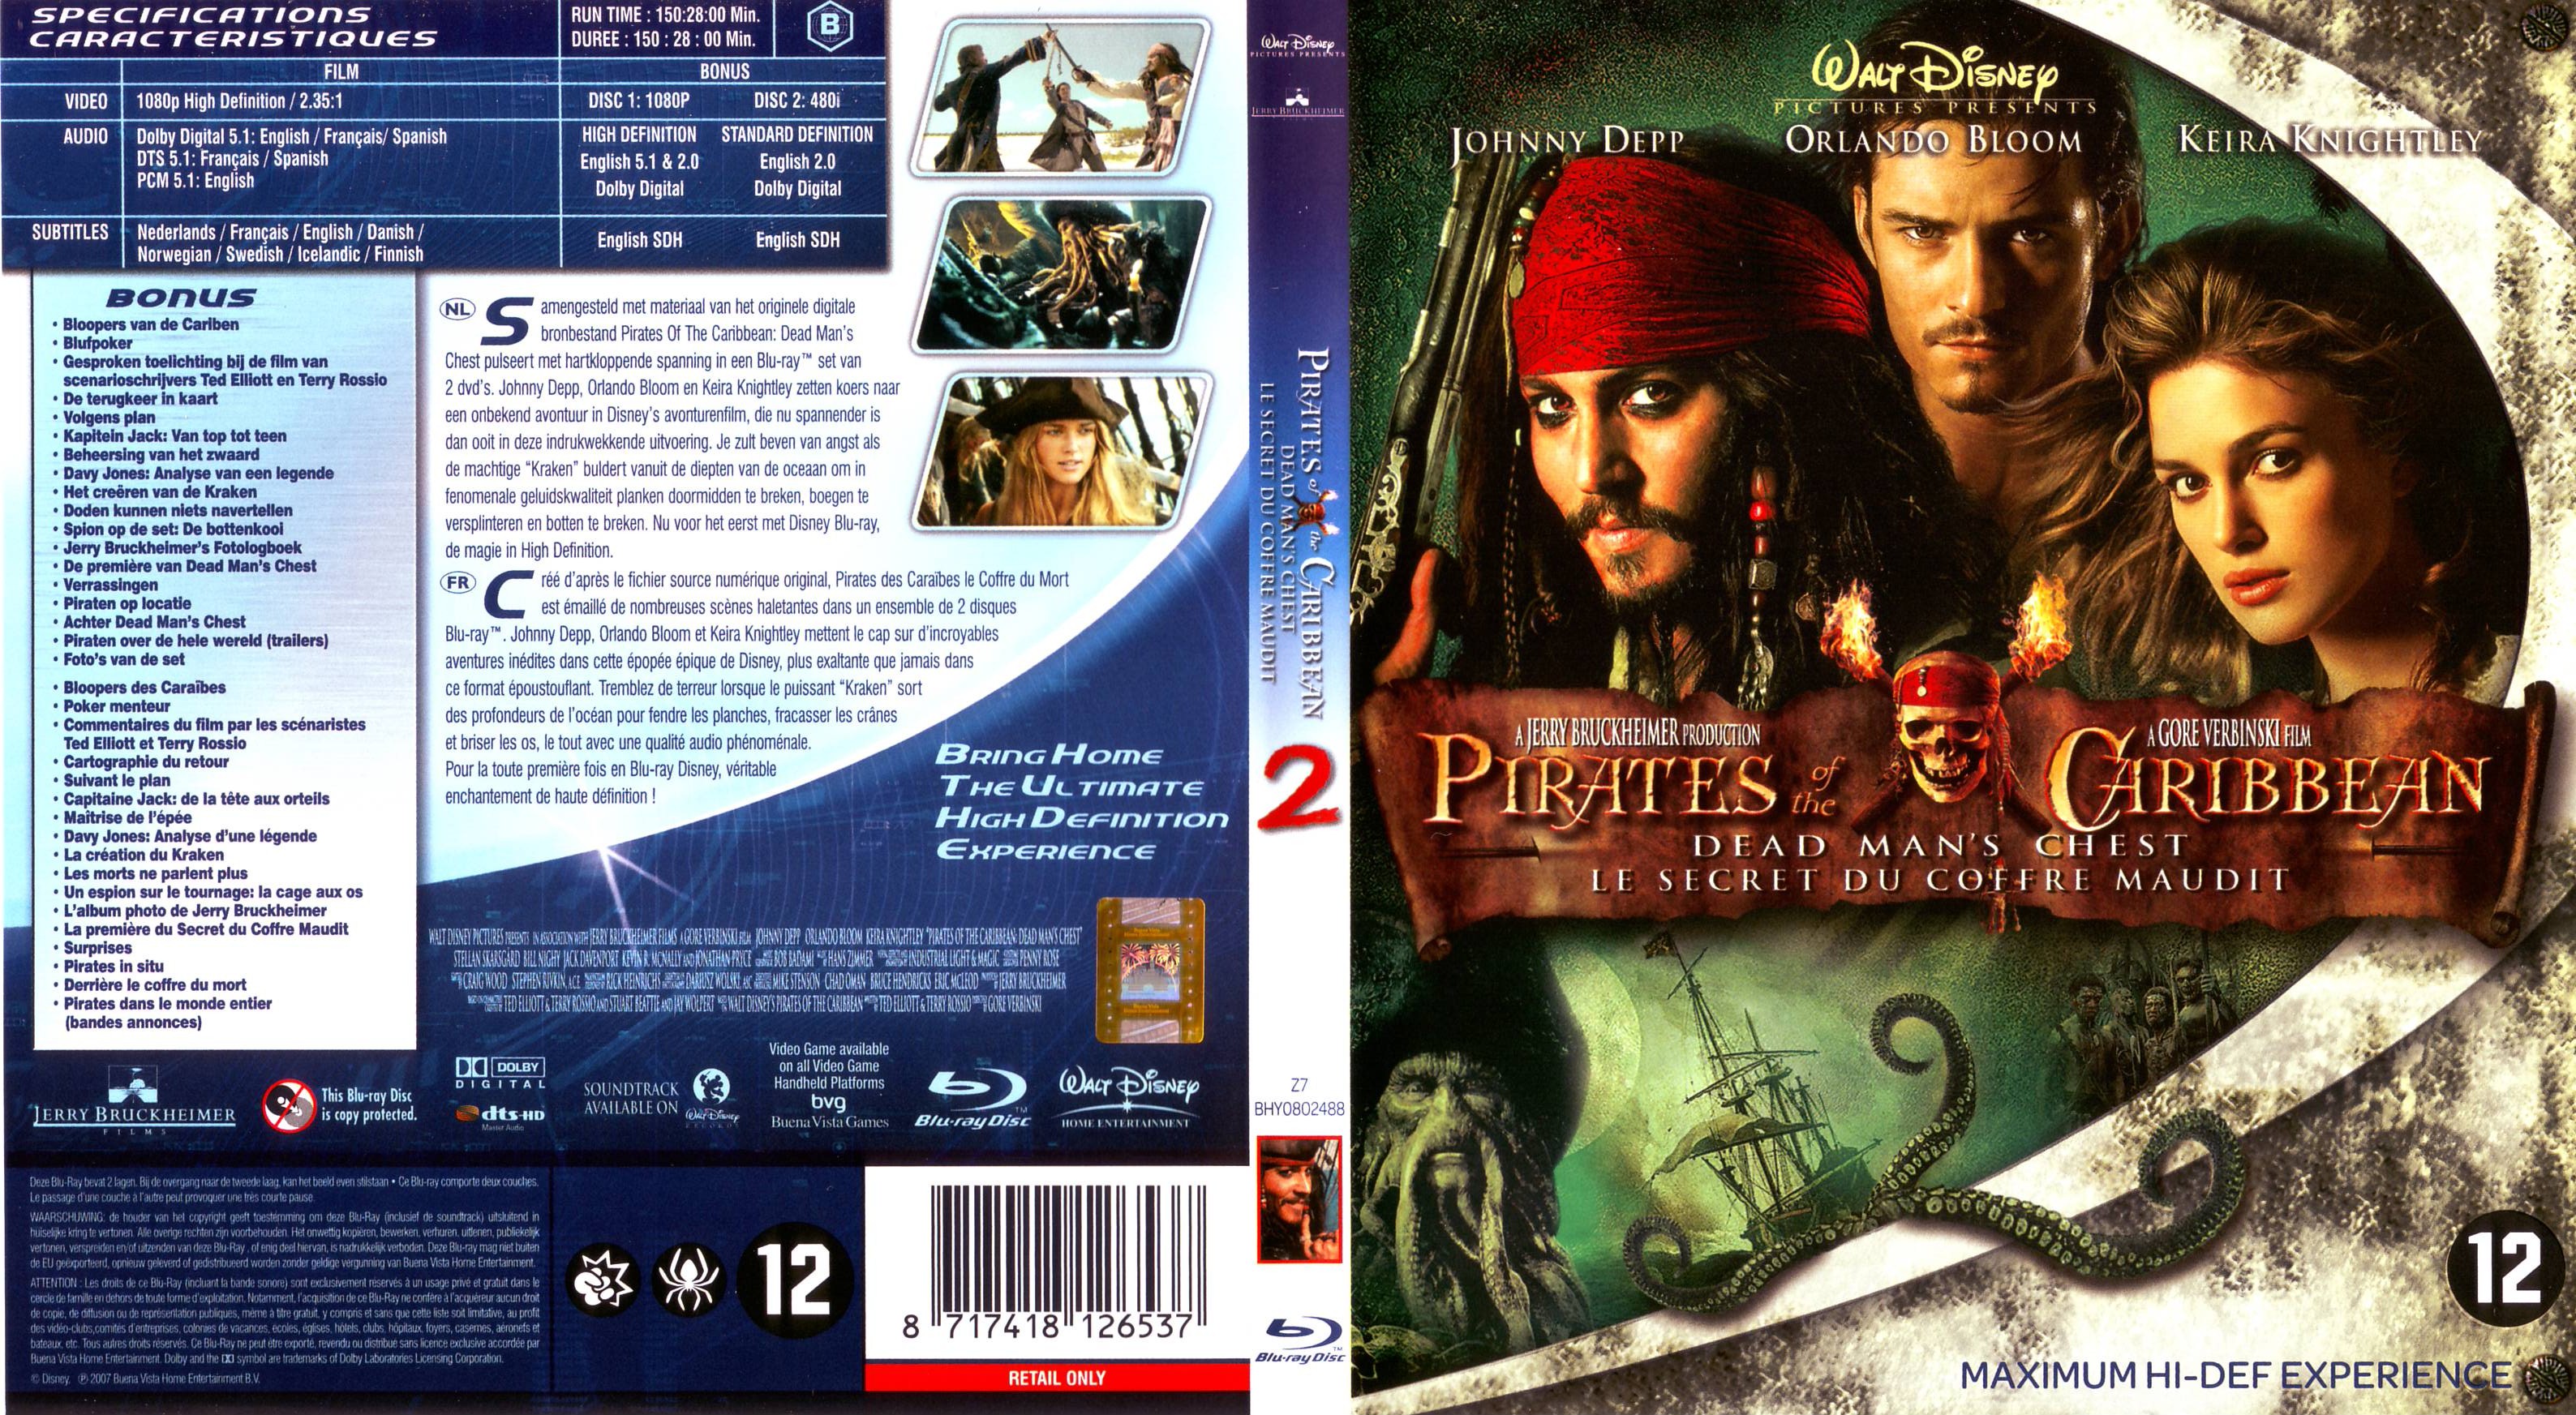 Jaquette DVD Pirates des Caraibes 2 (BLU-RAY)